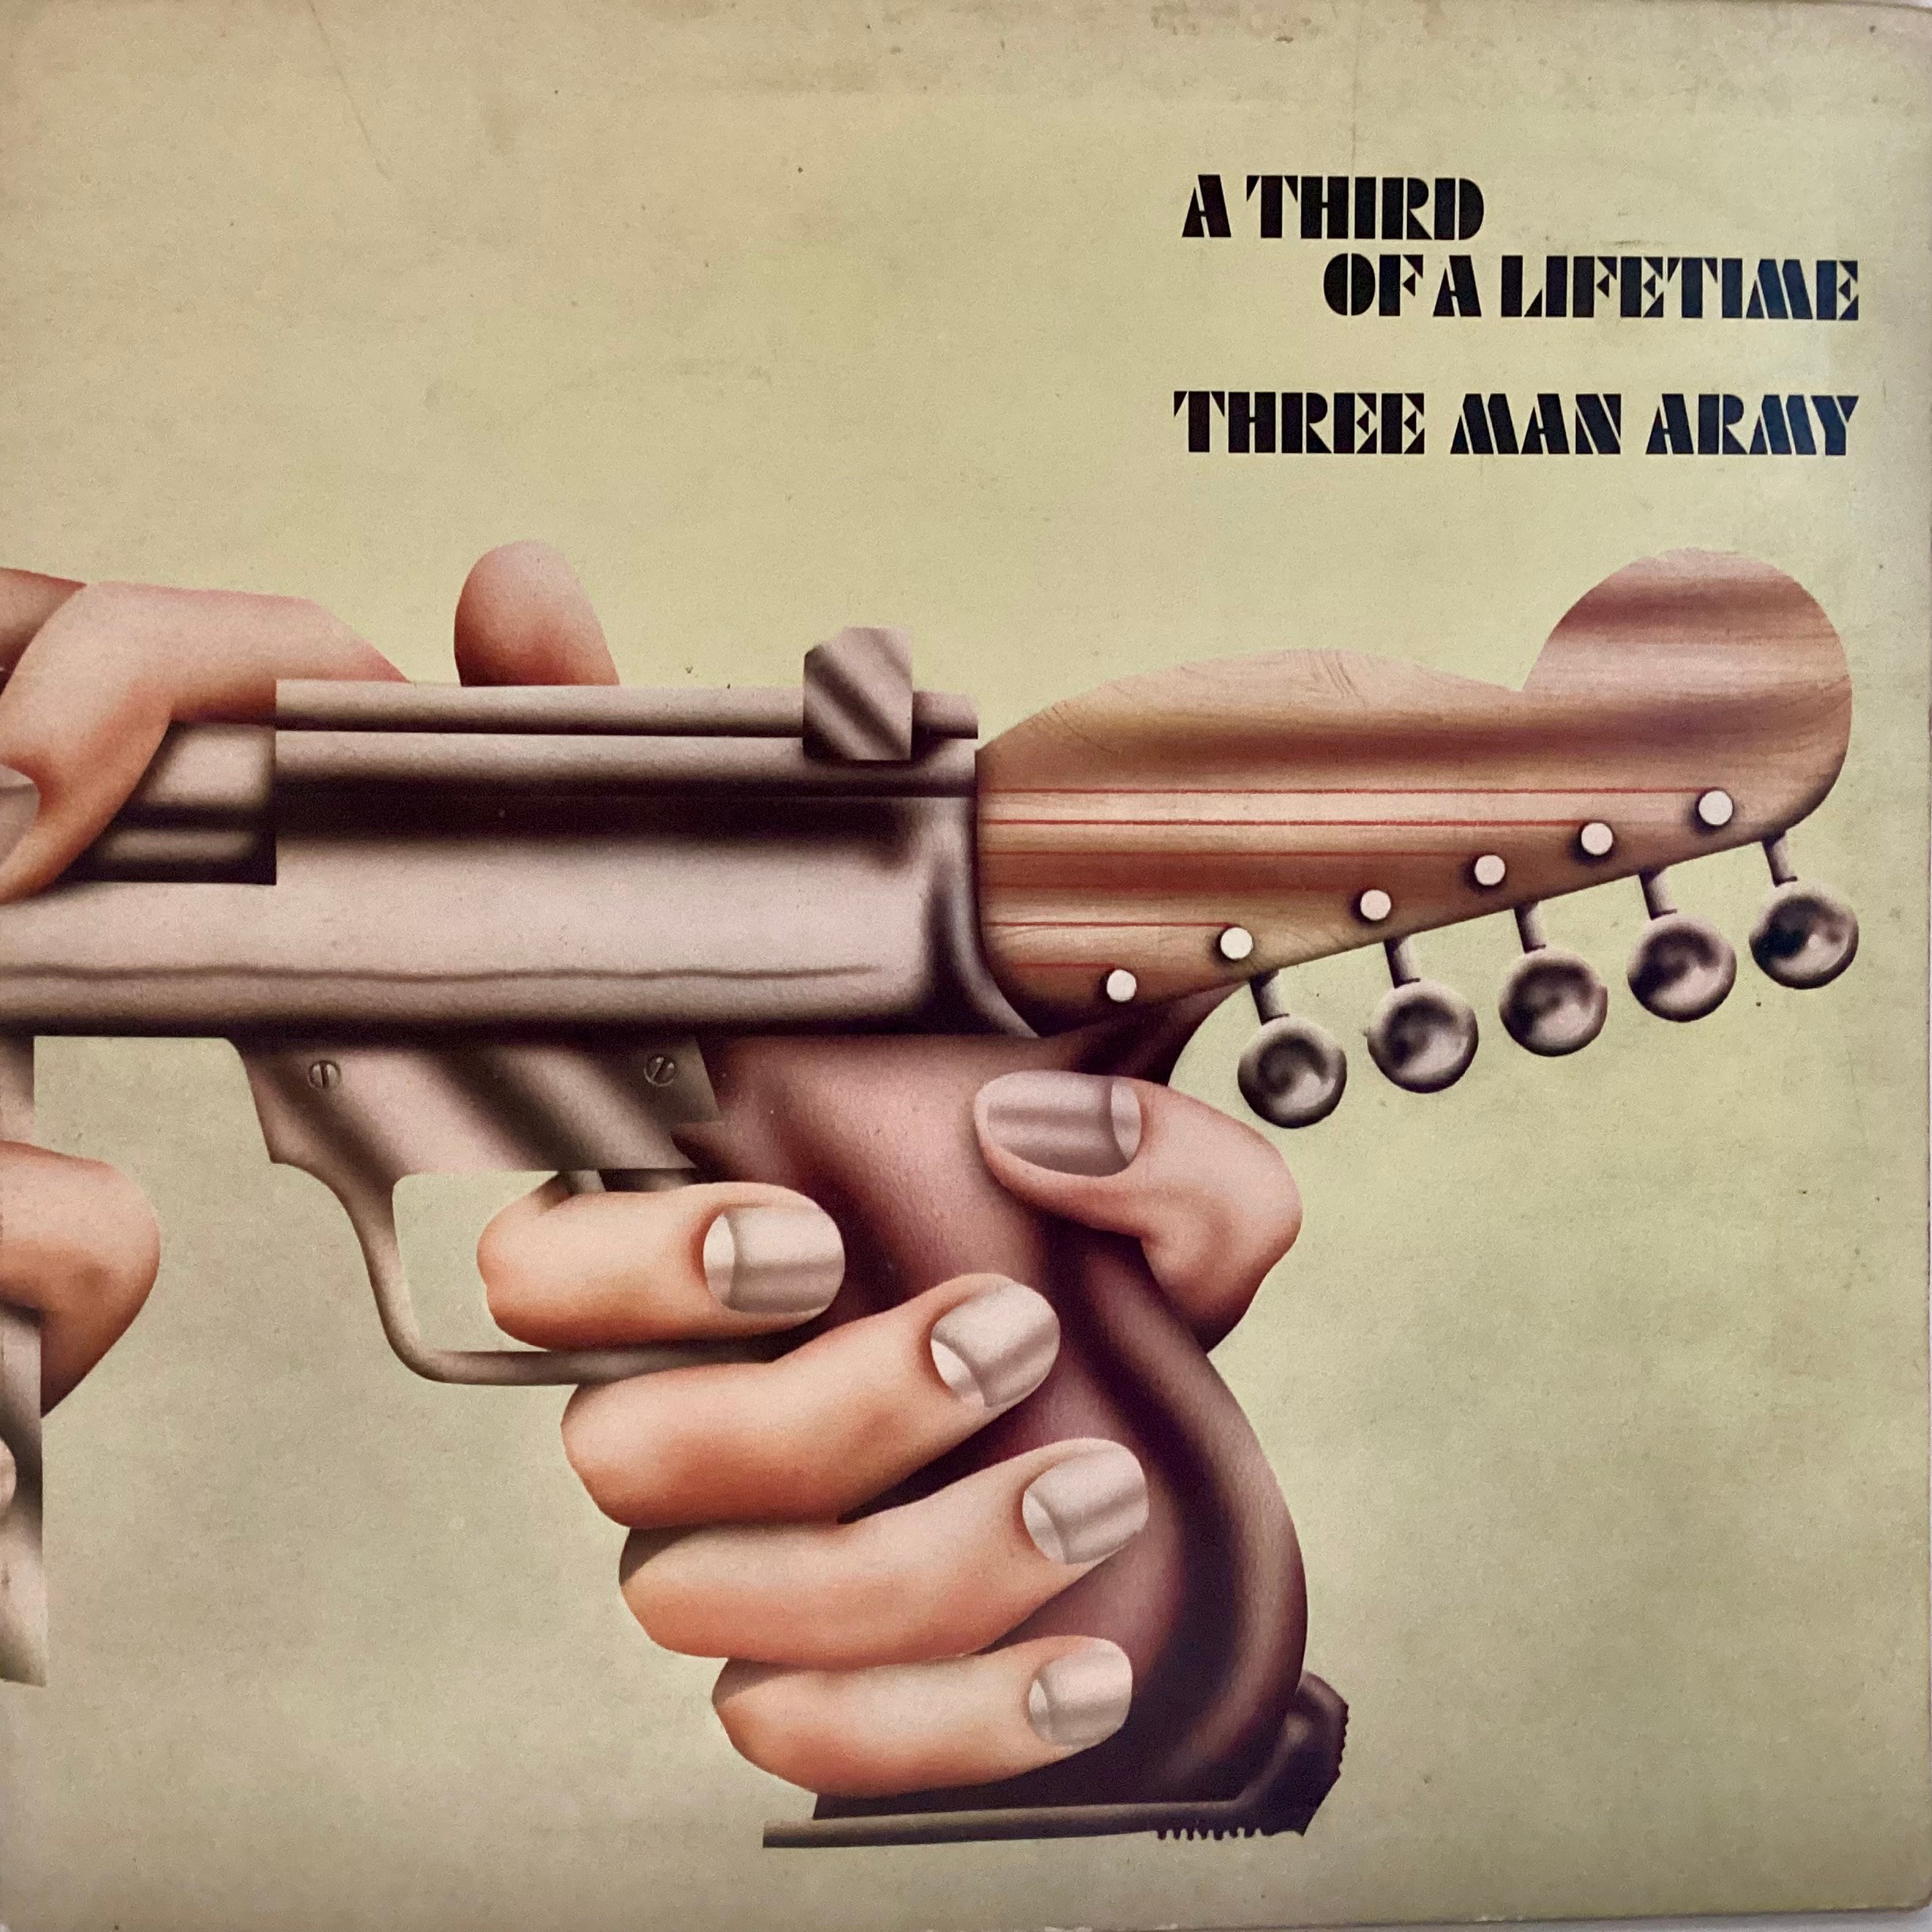 THREE MAN ARMY - THIRD OF A LIFETIME 1st UK PRESS VINYL ALBUM. Original UK LP Issued in 1971 by